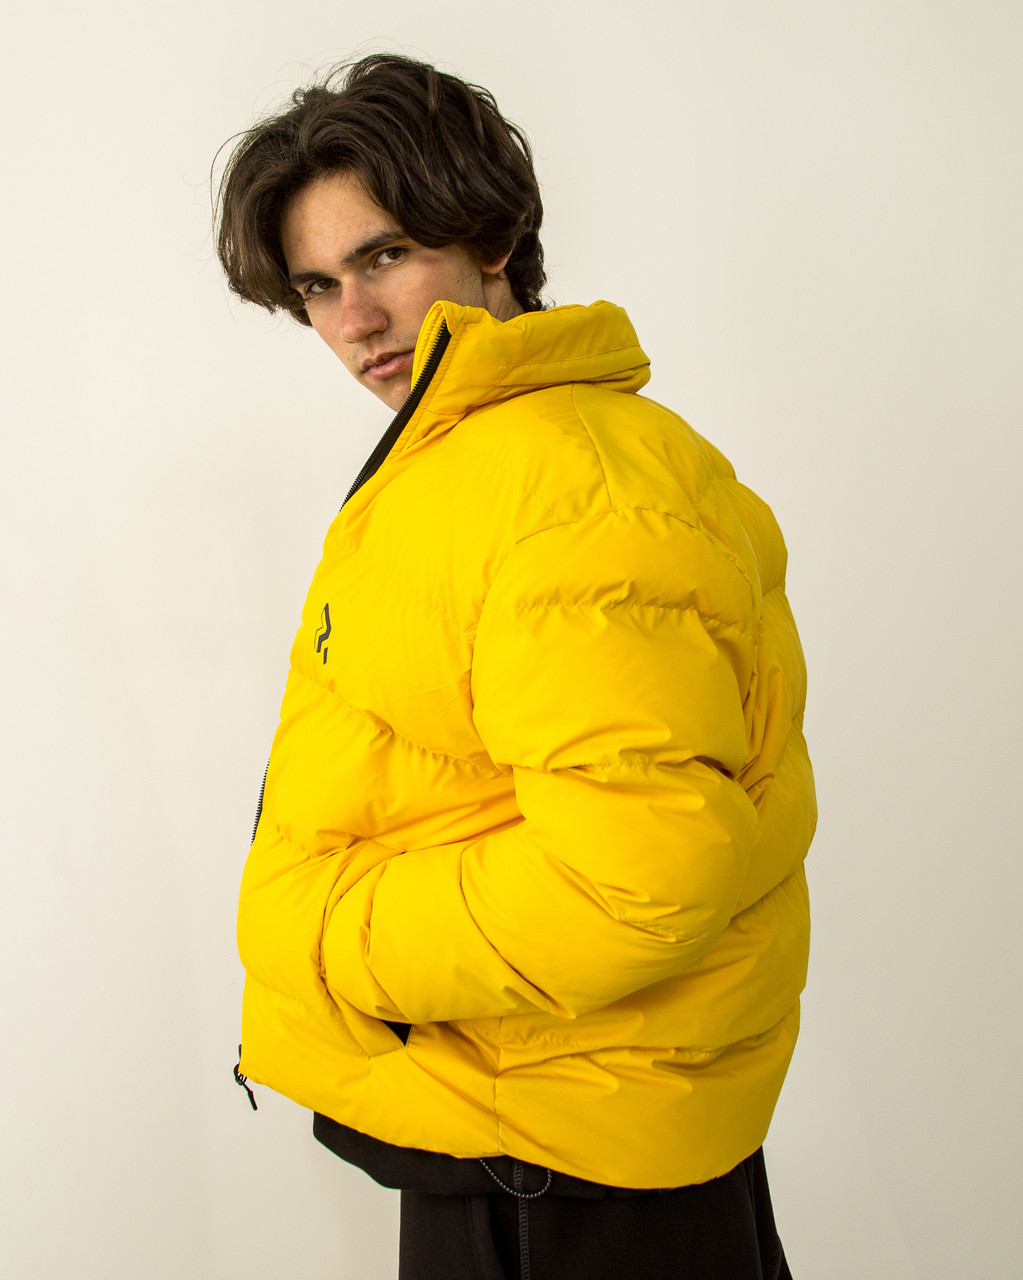 Коротка весняна куртка-пуховик Holla жовта Пушка Огонь - Фото 4